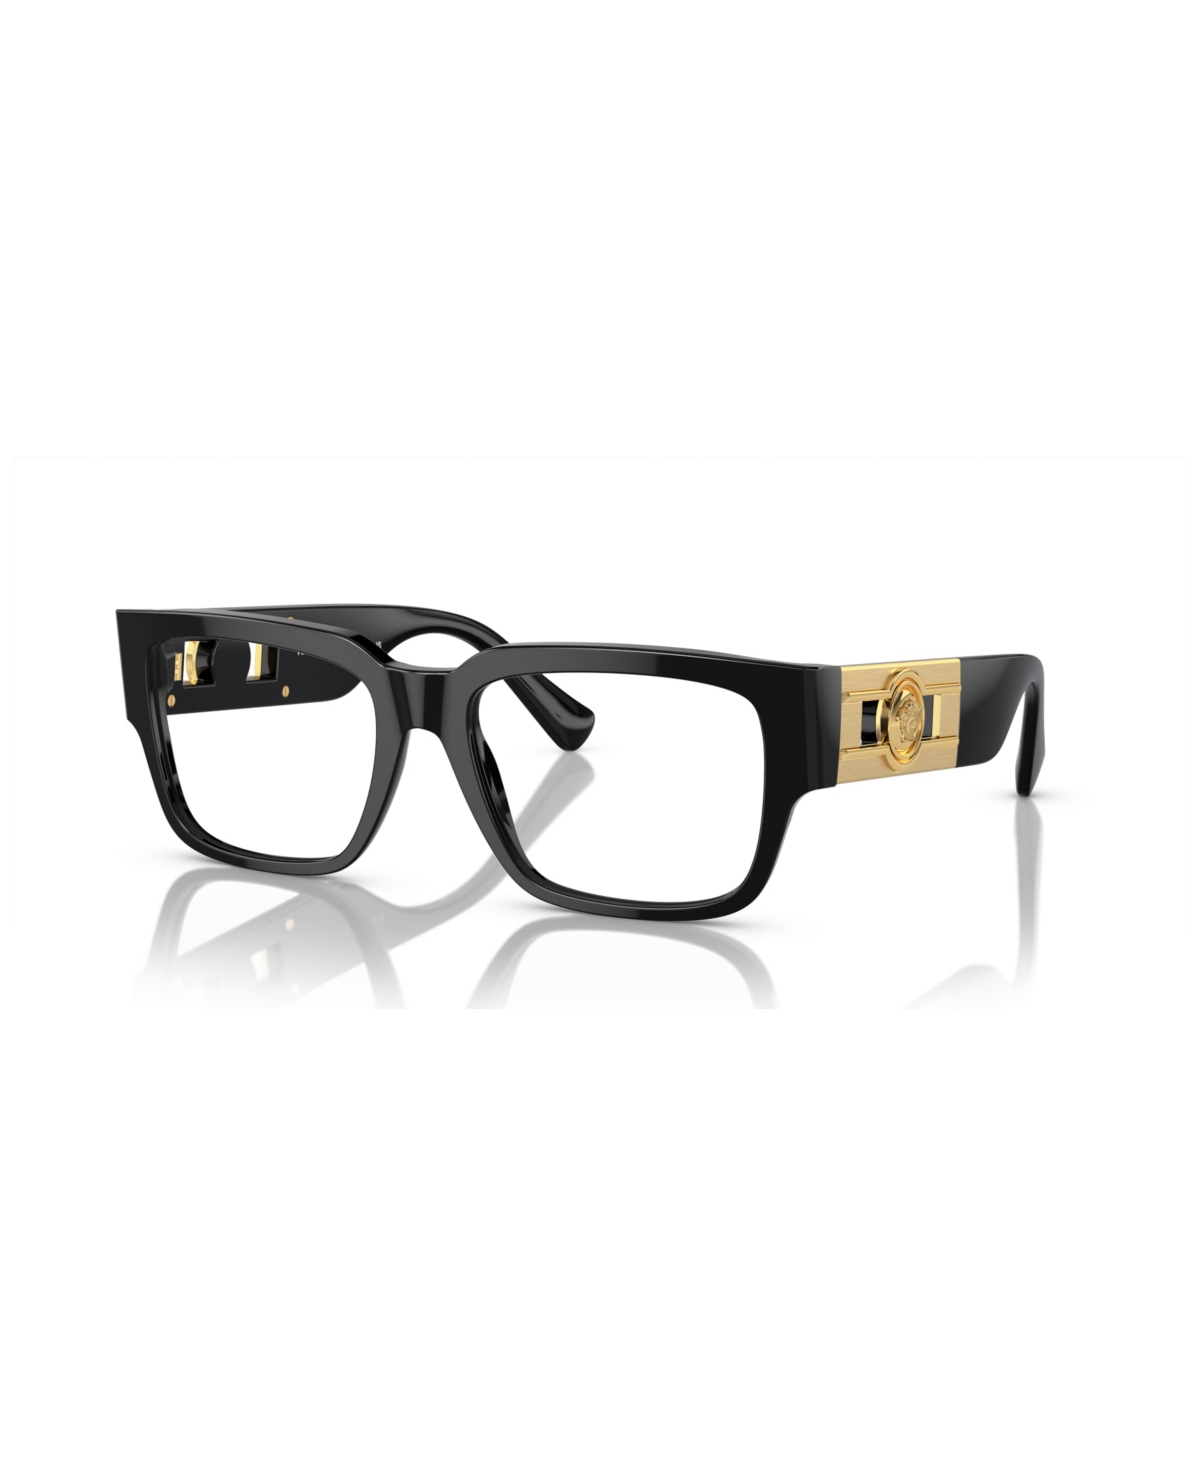 Men's Eyeglasses, VE3350 - Gray Transparent